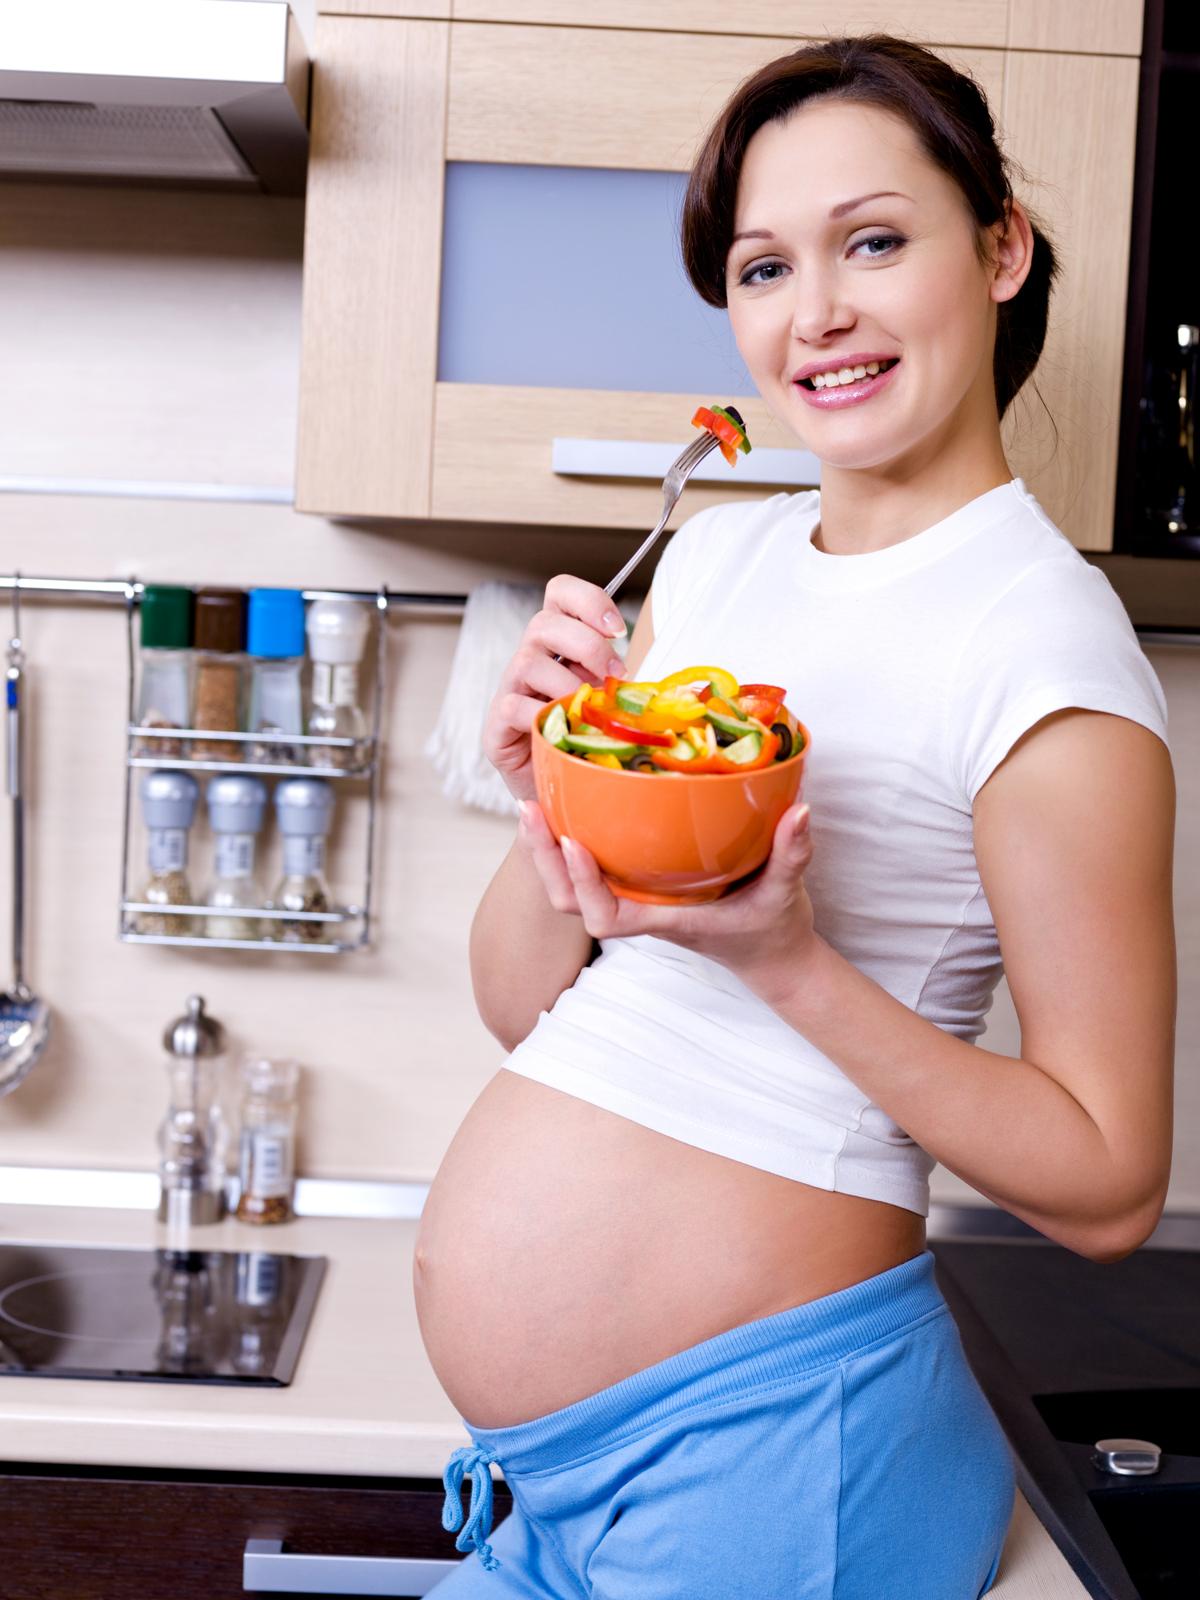 Harmful Pregnancy Myths You Should Ignore